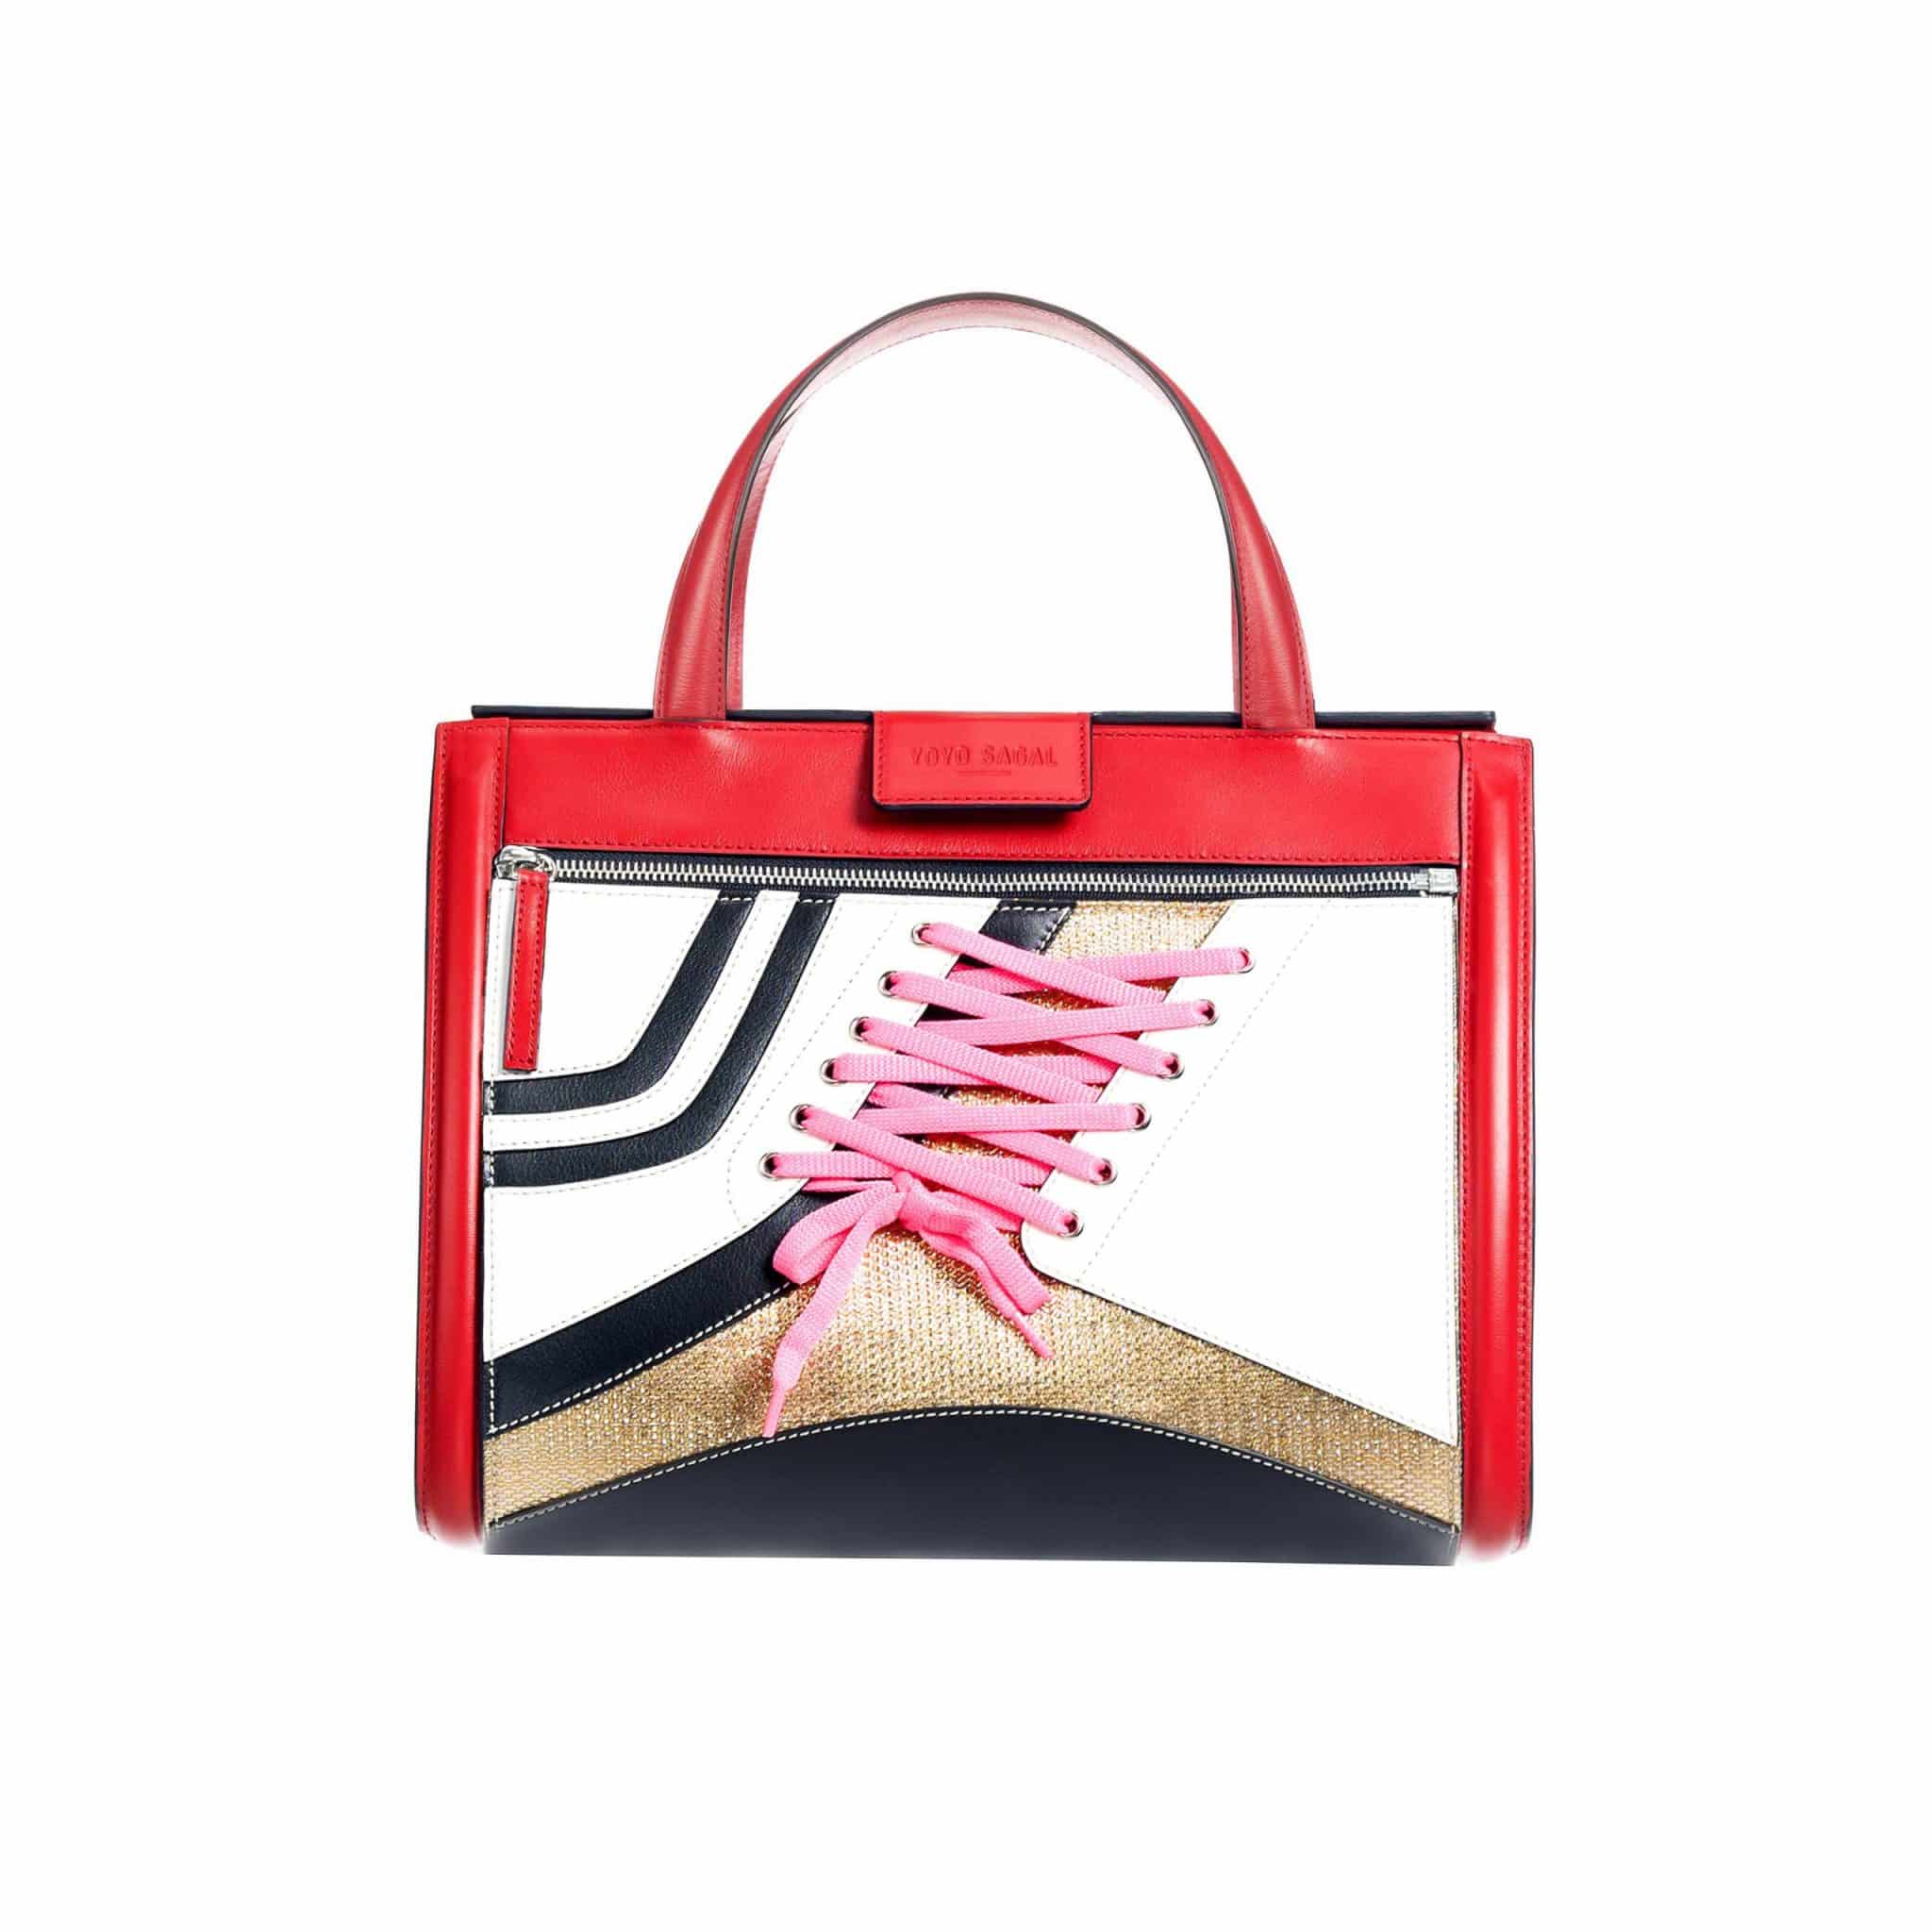 Bolso rojo mujer - Red bag with sneaker front- Yoyo Sagal